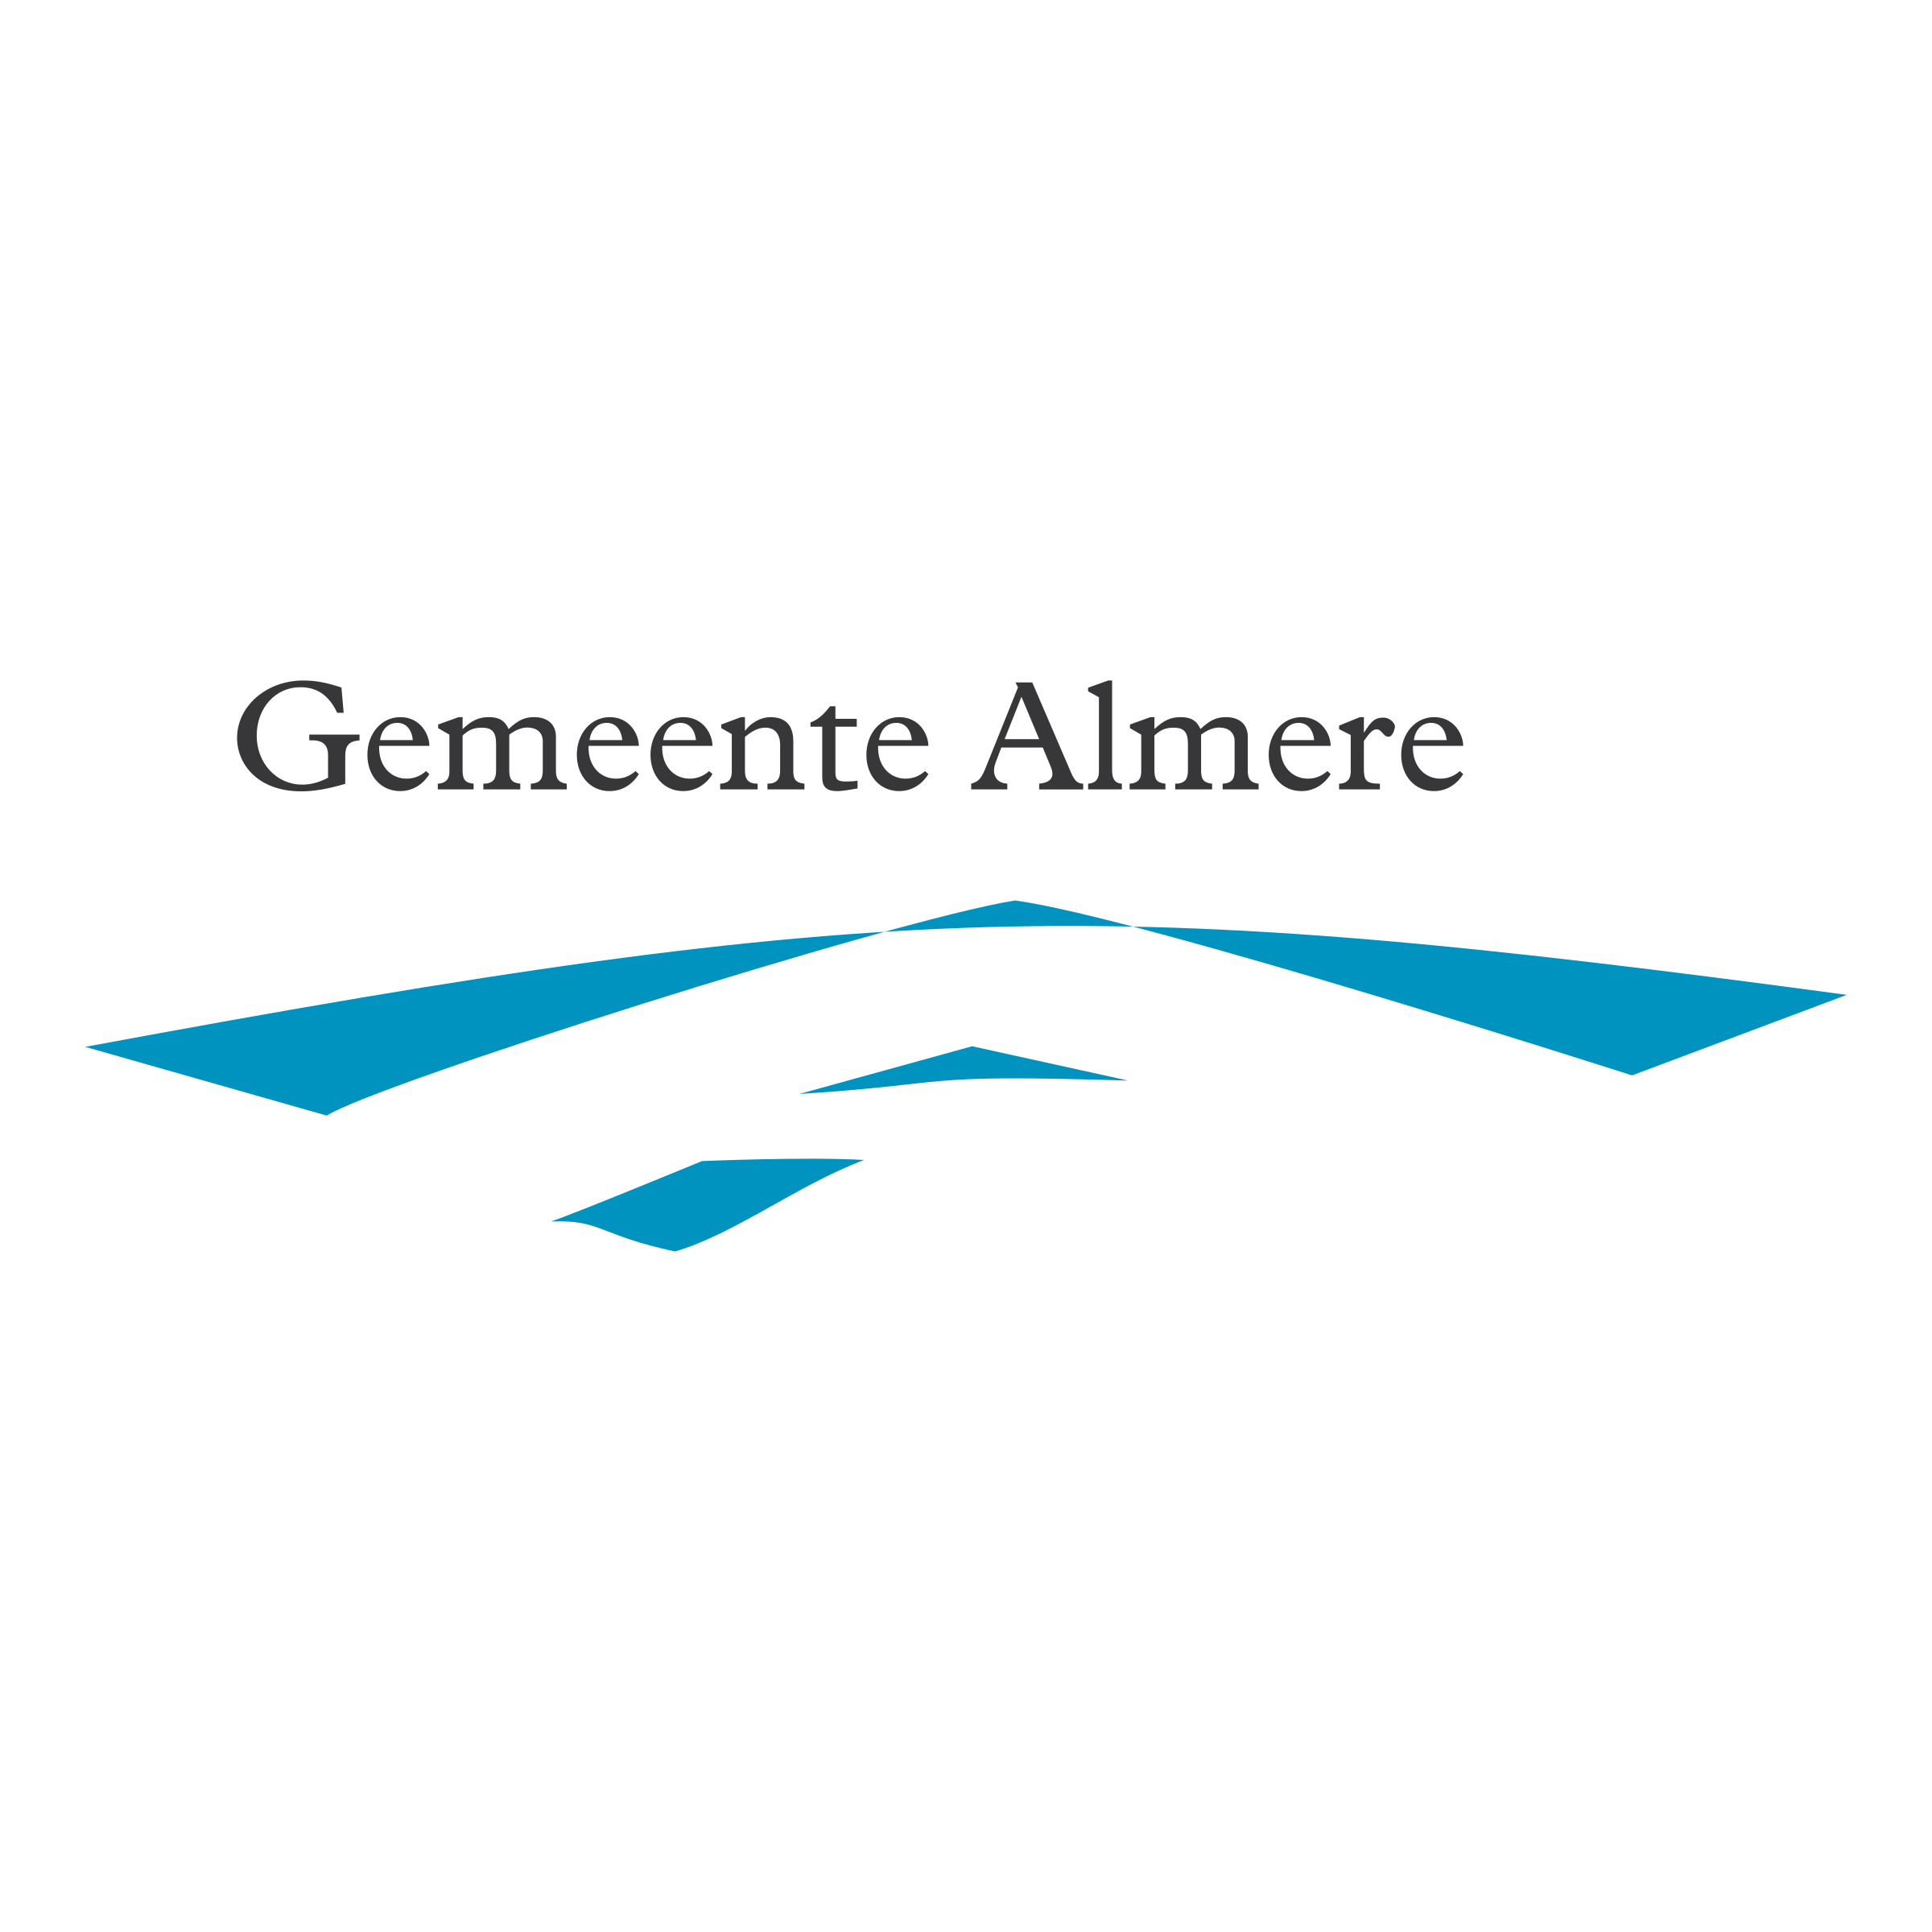 Logo van Almere